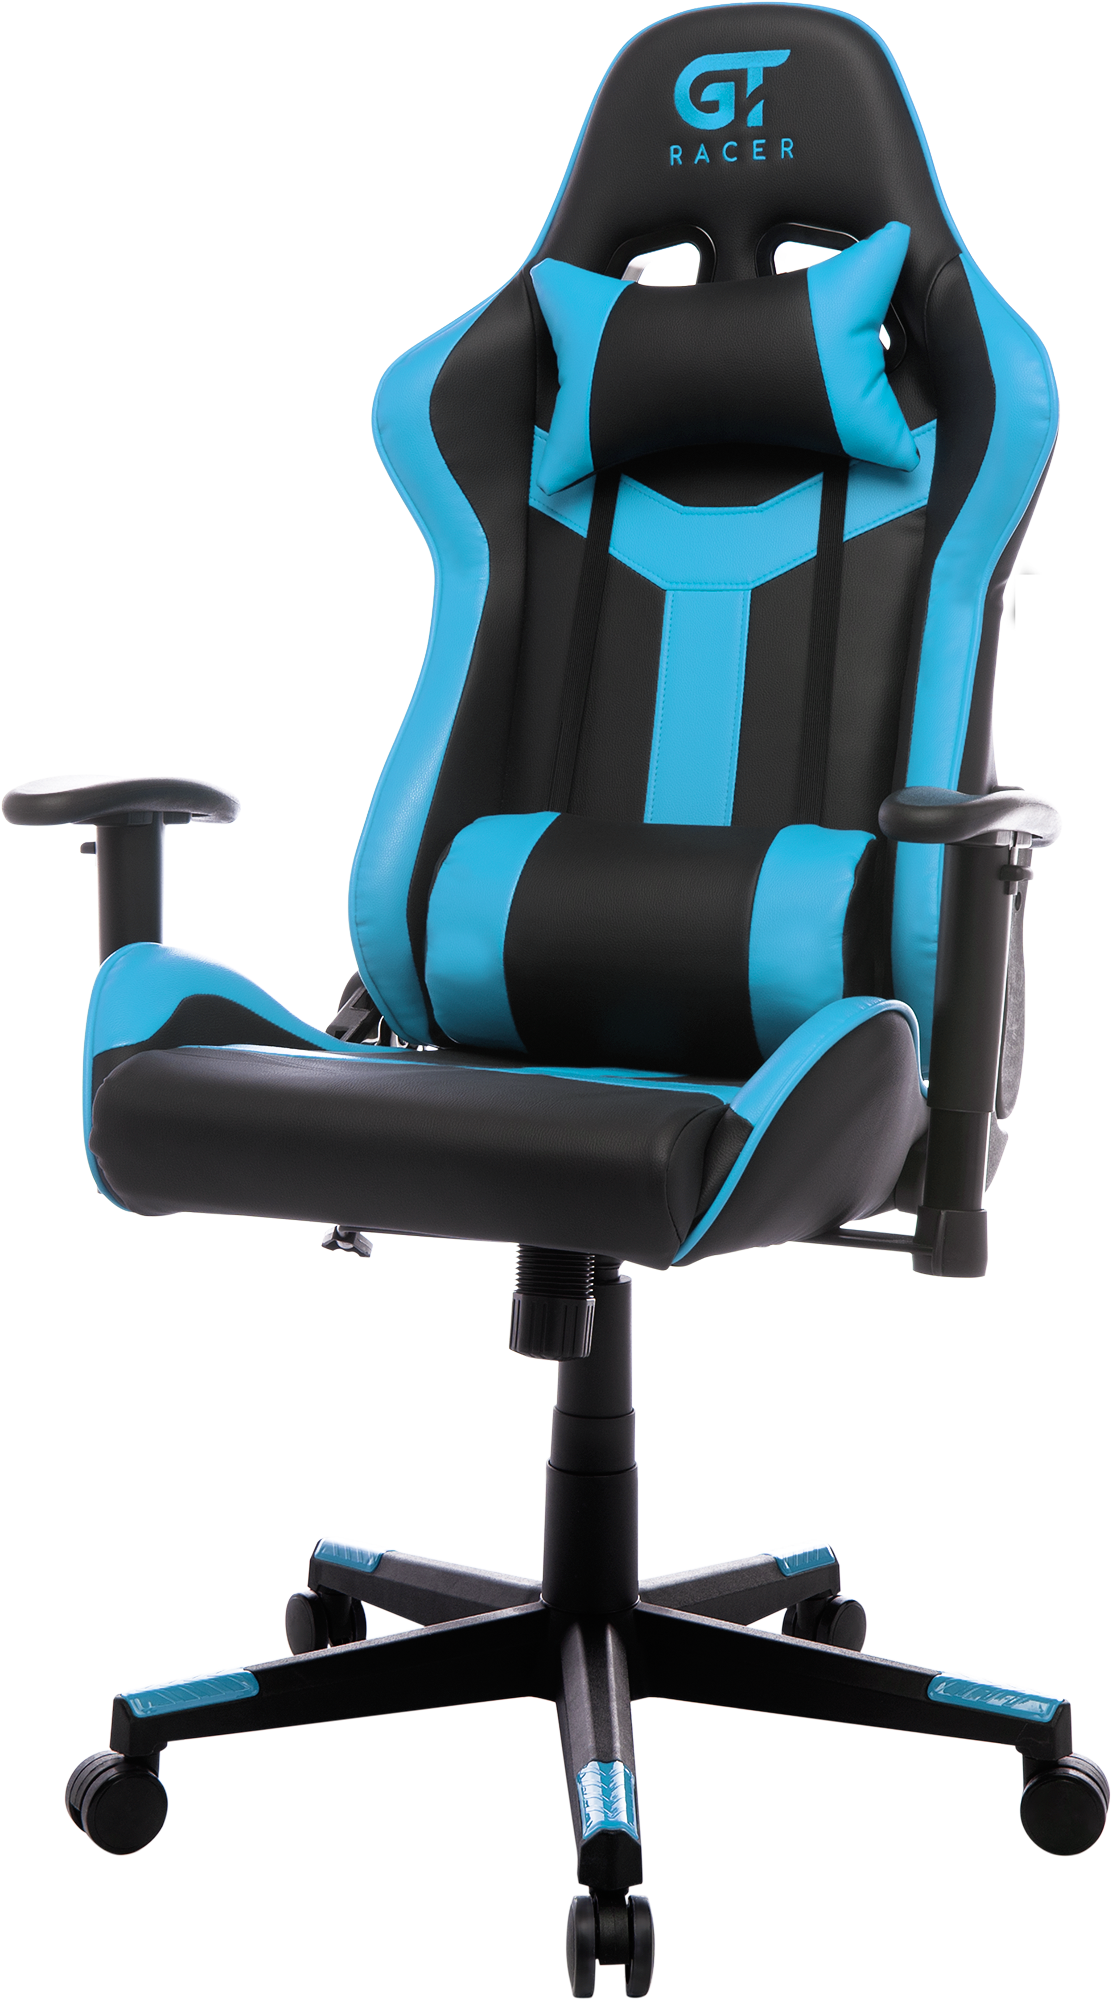 Геймерське крісло GT Racer чорне із синім (X-2527 Black/Blue) - фото 4